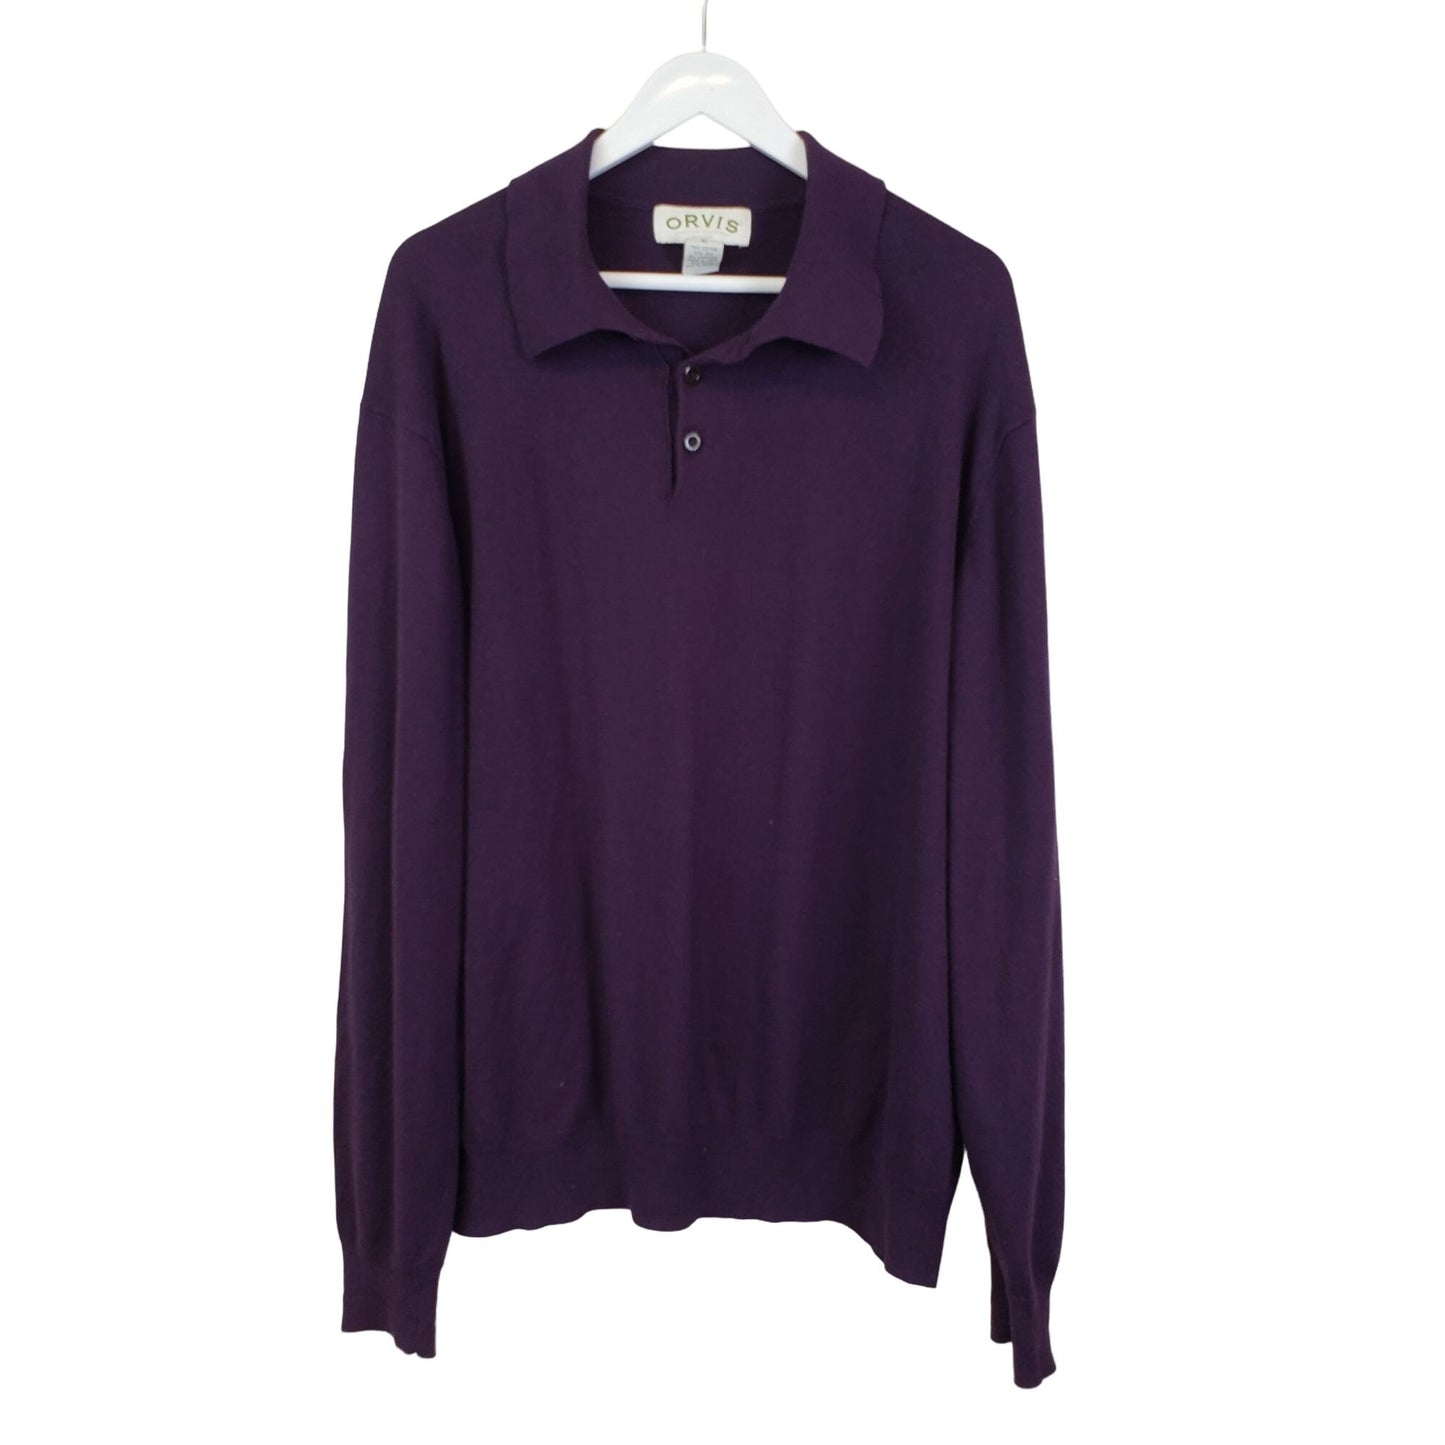 Orvis Silk & Cashmere Blend Quarter Button Sweater Size XL